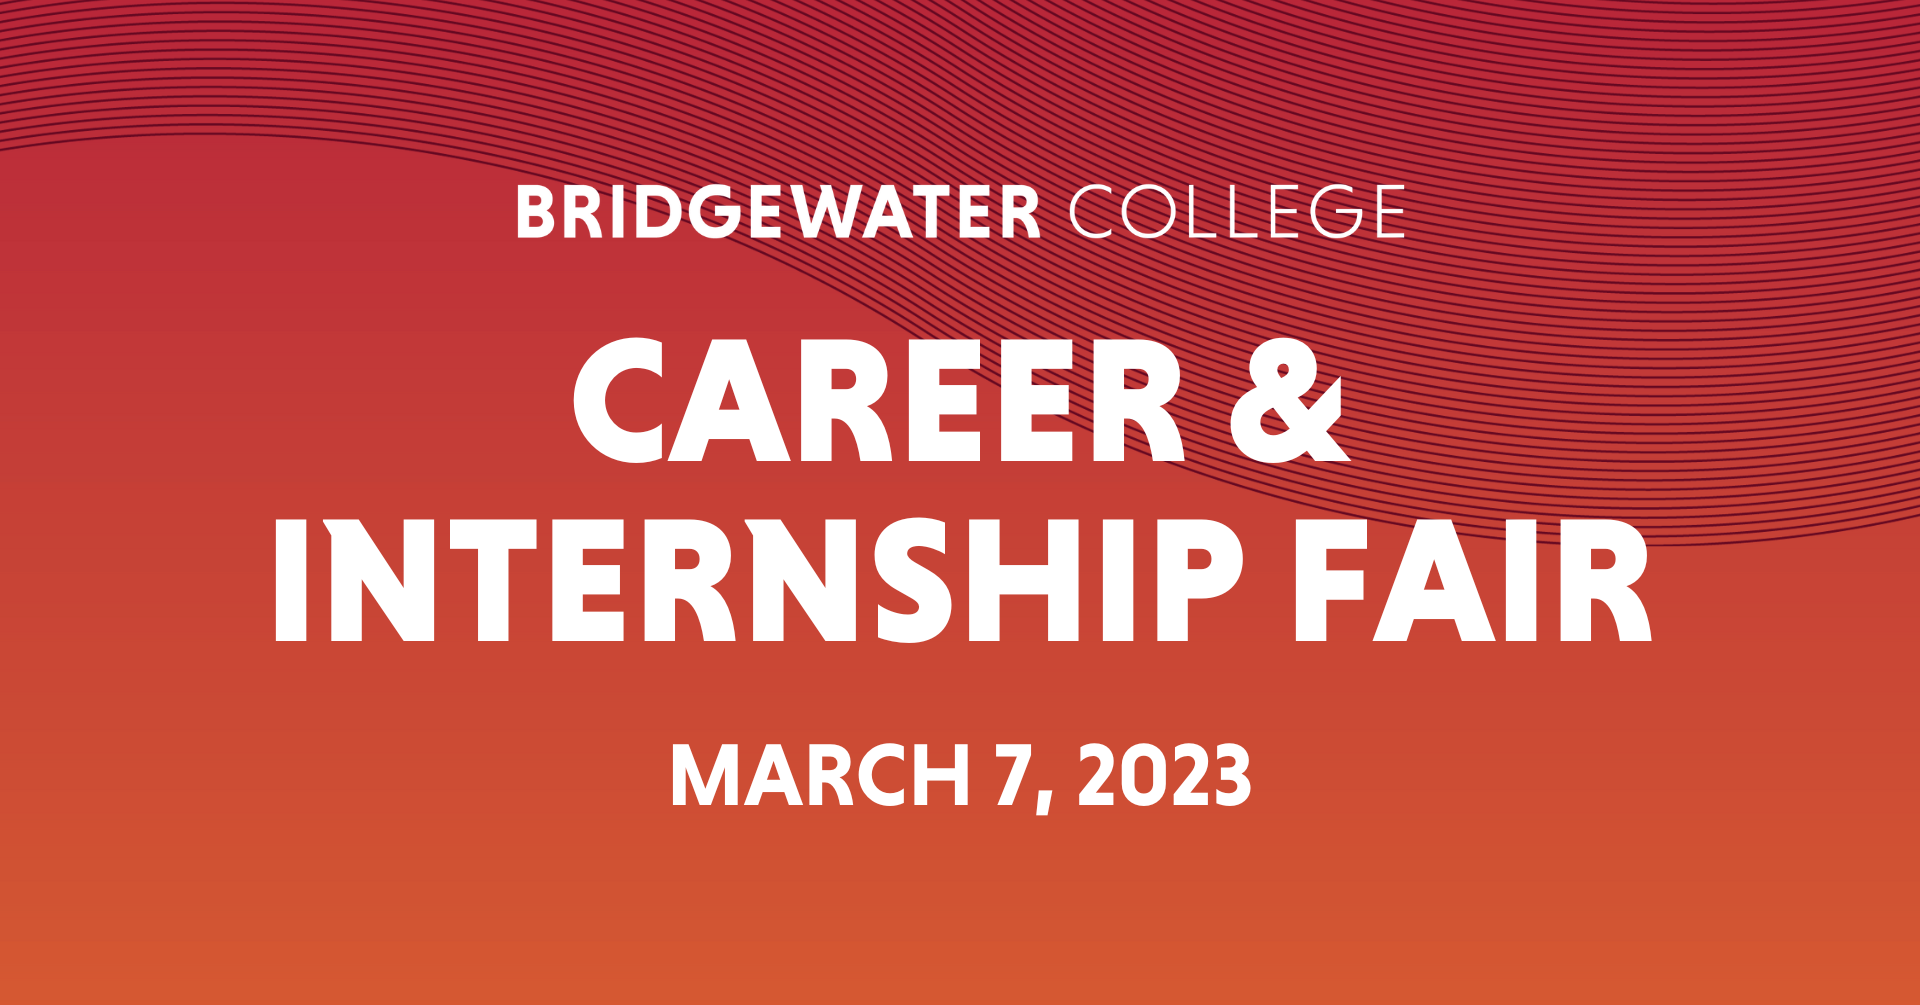 Bridgewater College Career & Internship Fair March 7 2023